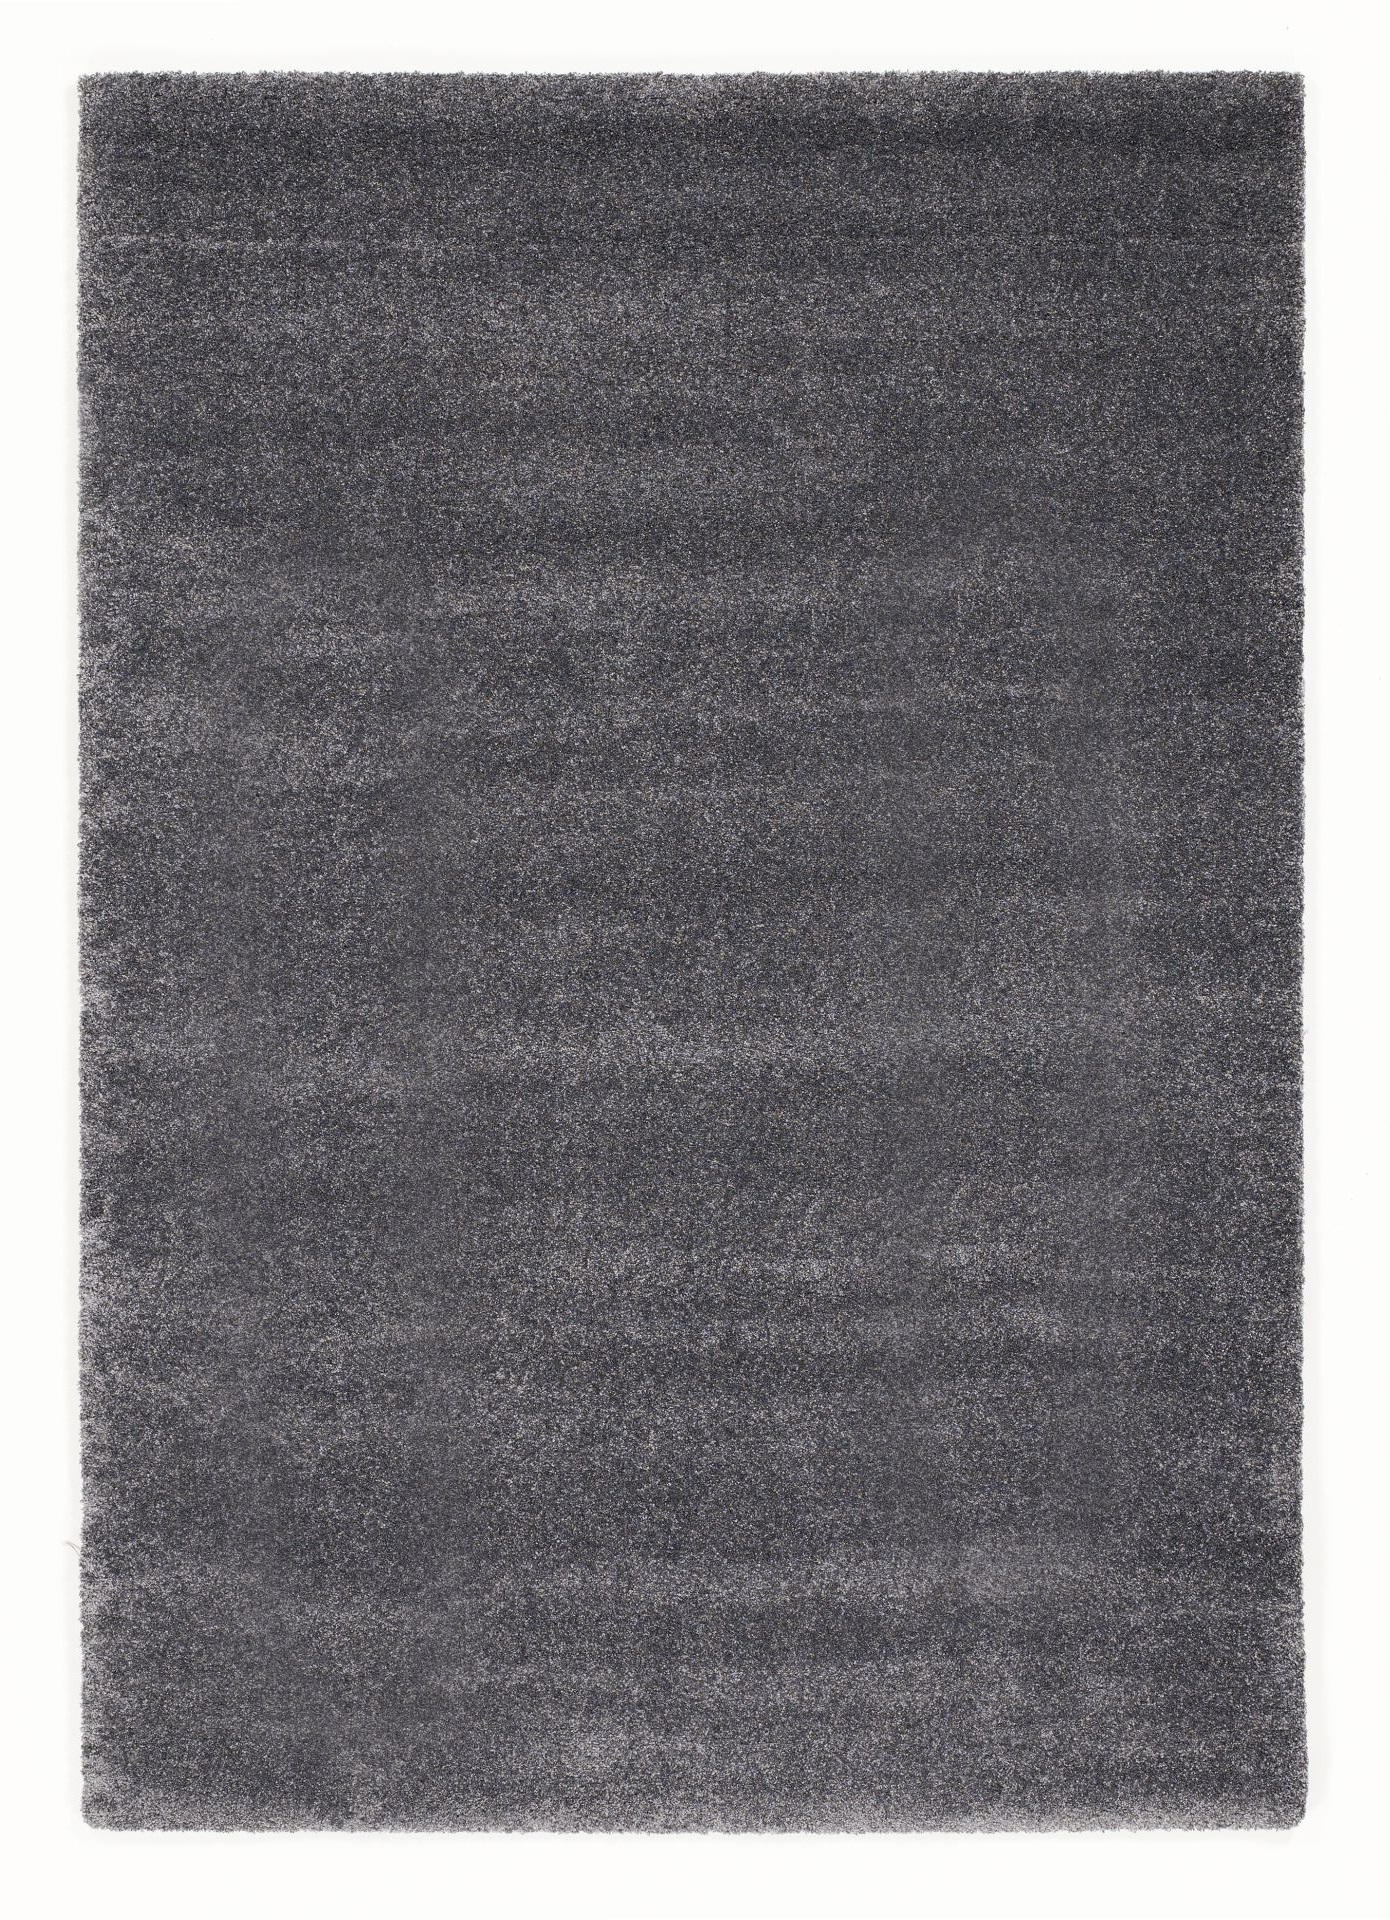 HOCHFLORTEPPICH  240/290 cm  gewebt  Dunkelgrau   - Dunkelgrau, Basics, Textil (240/290cm) - Novel